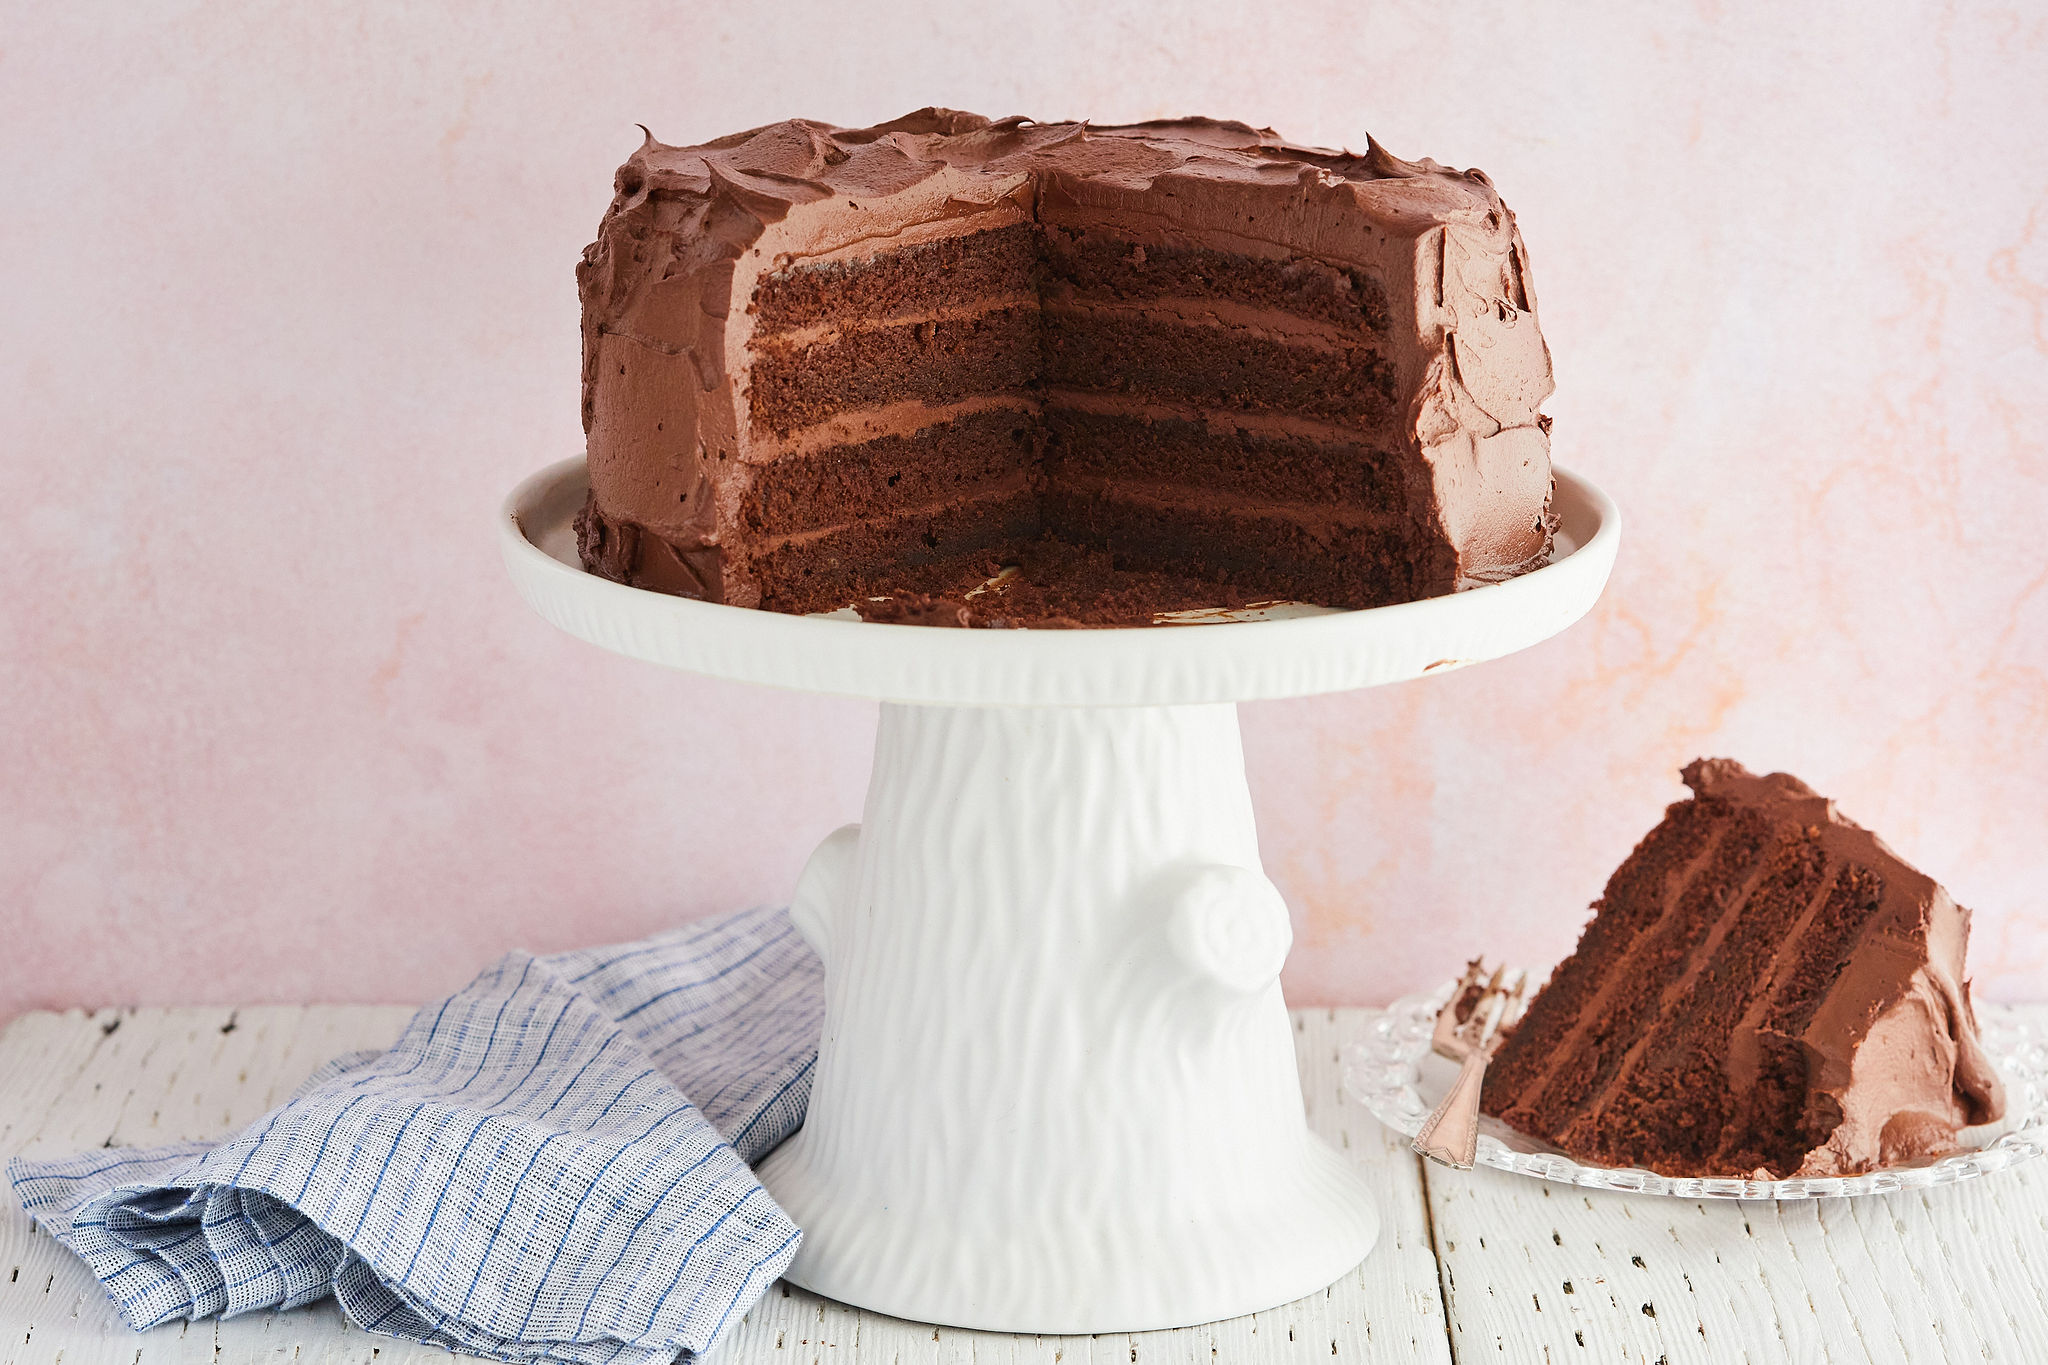 The Best Ever Chocolate Cake With Whipped Dark Chocolate Ganache